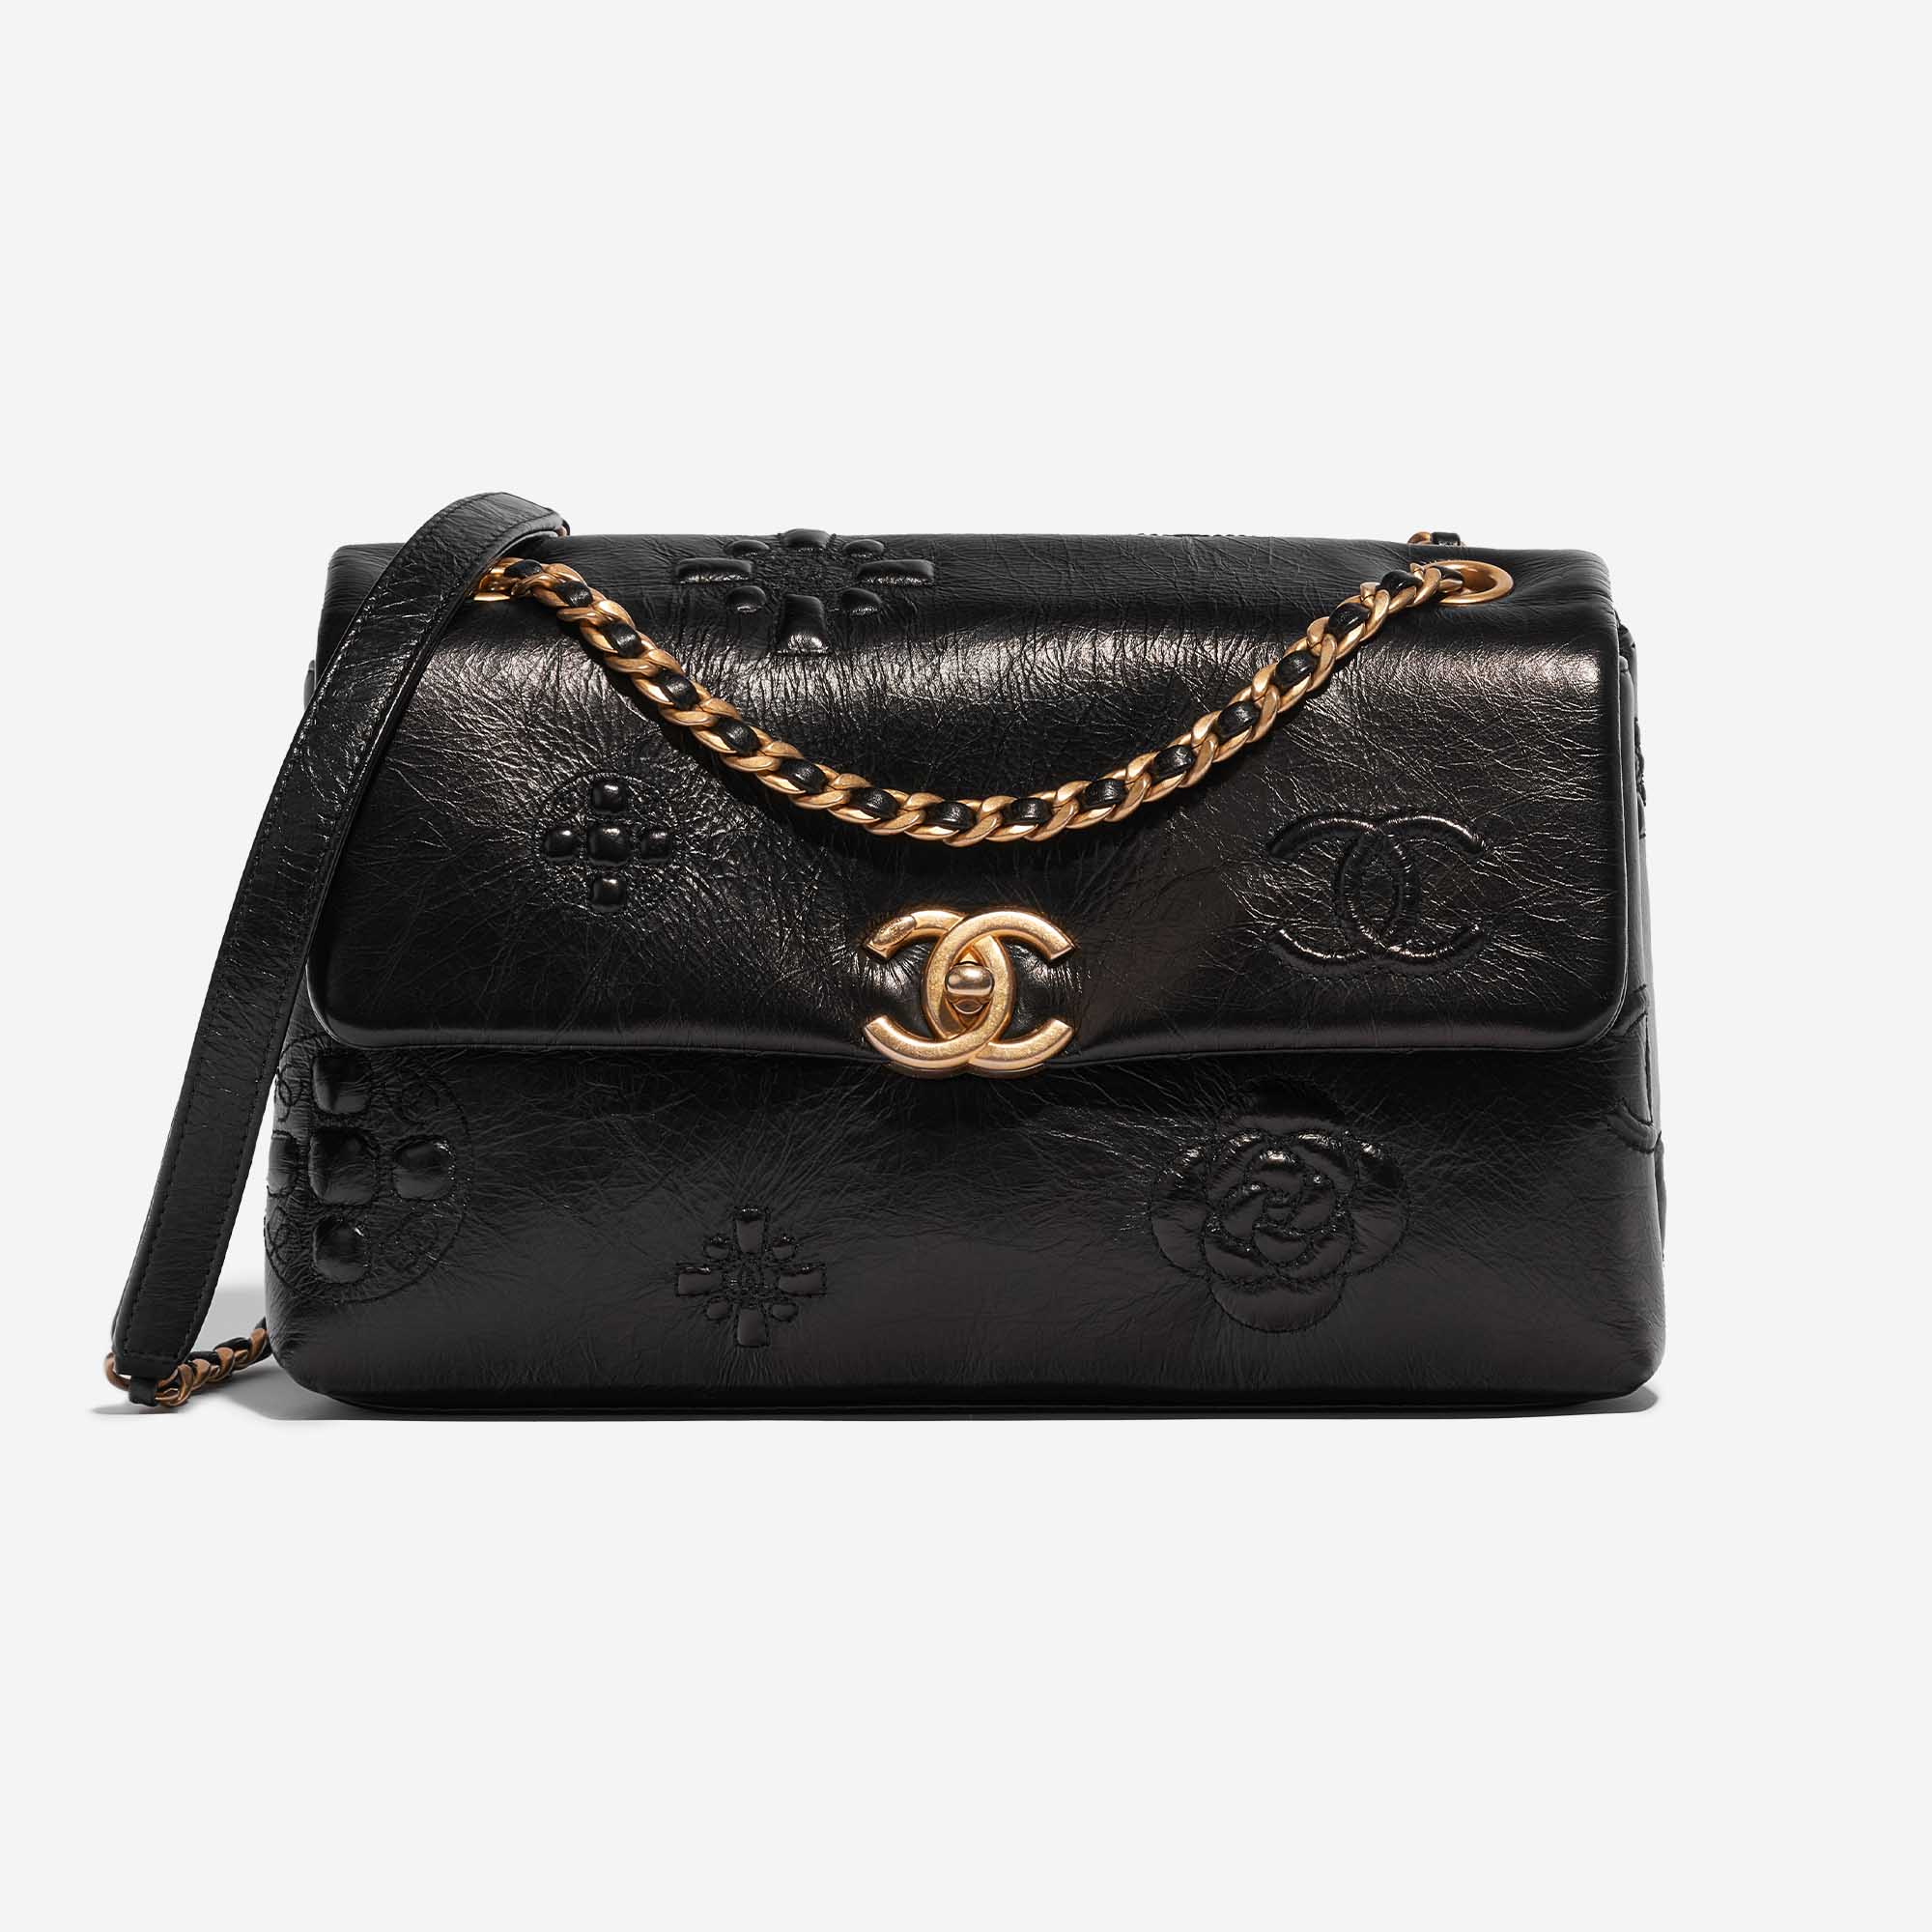 Black Chanel Bag Ornament